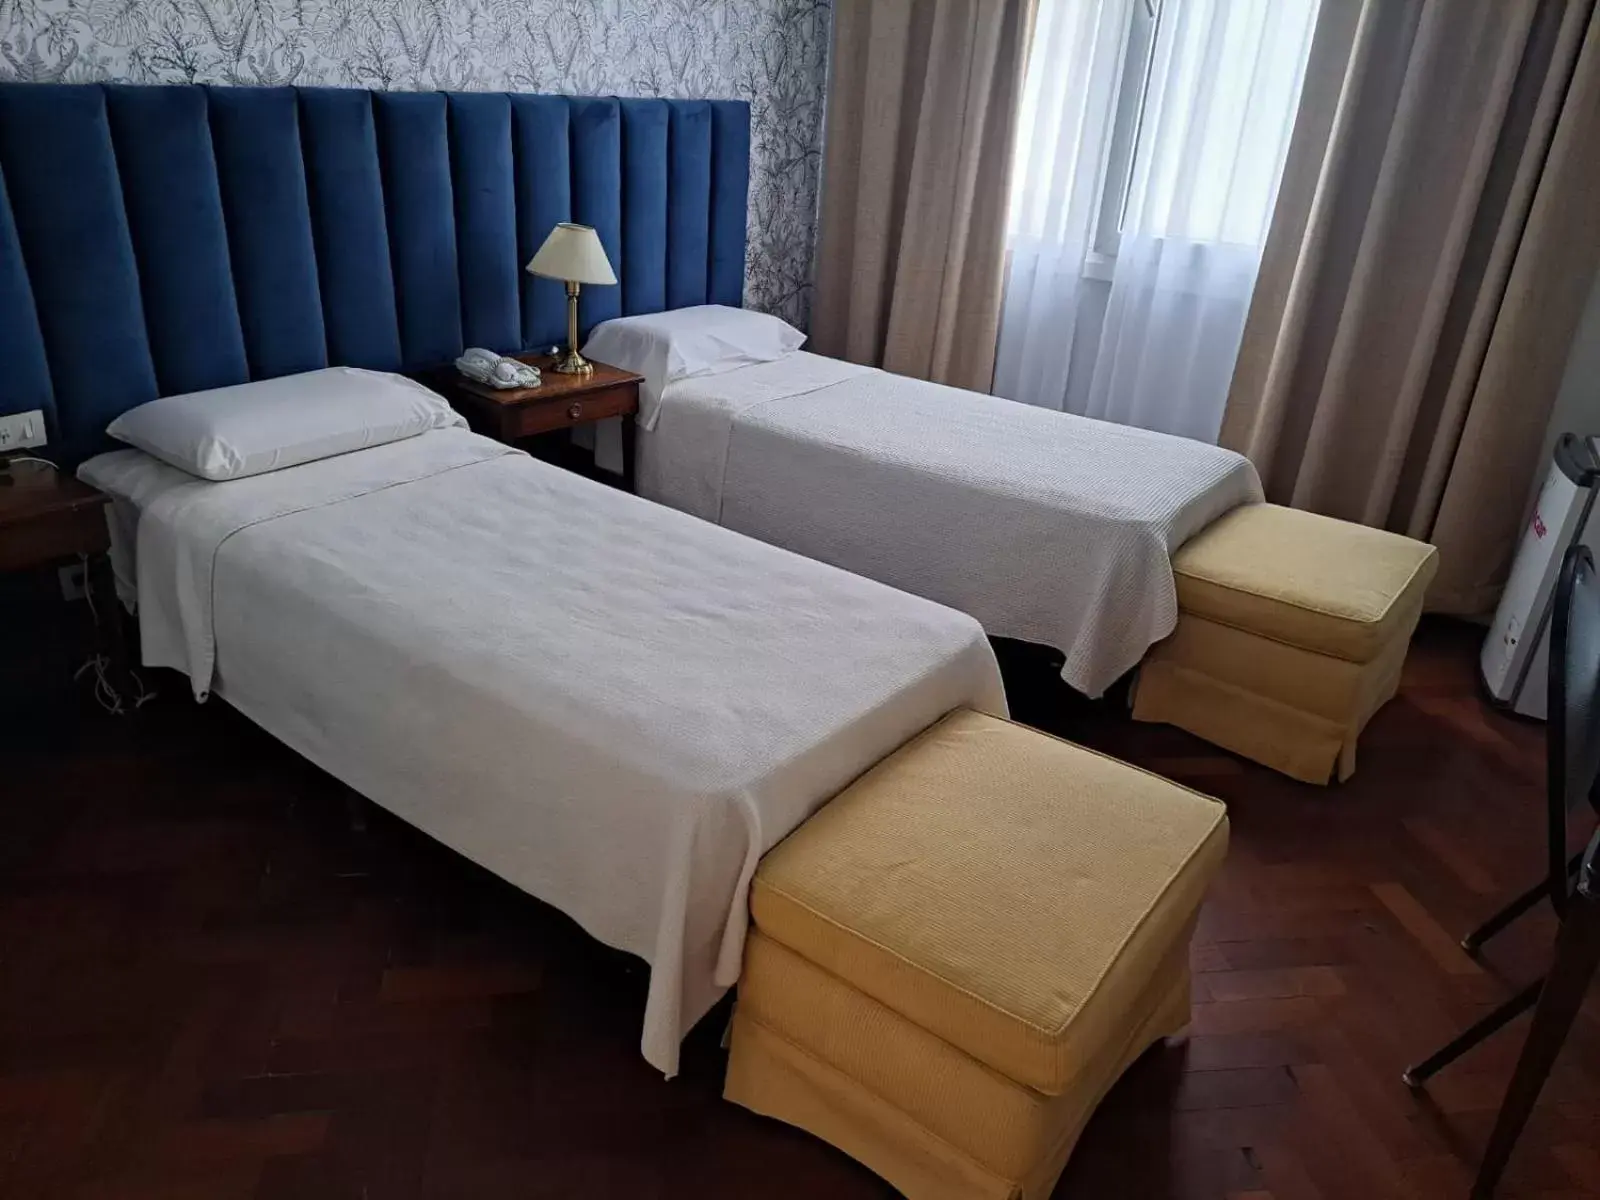 Bed in HOTEL REGIS